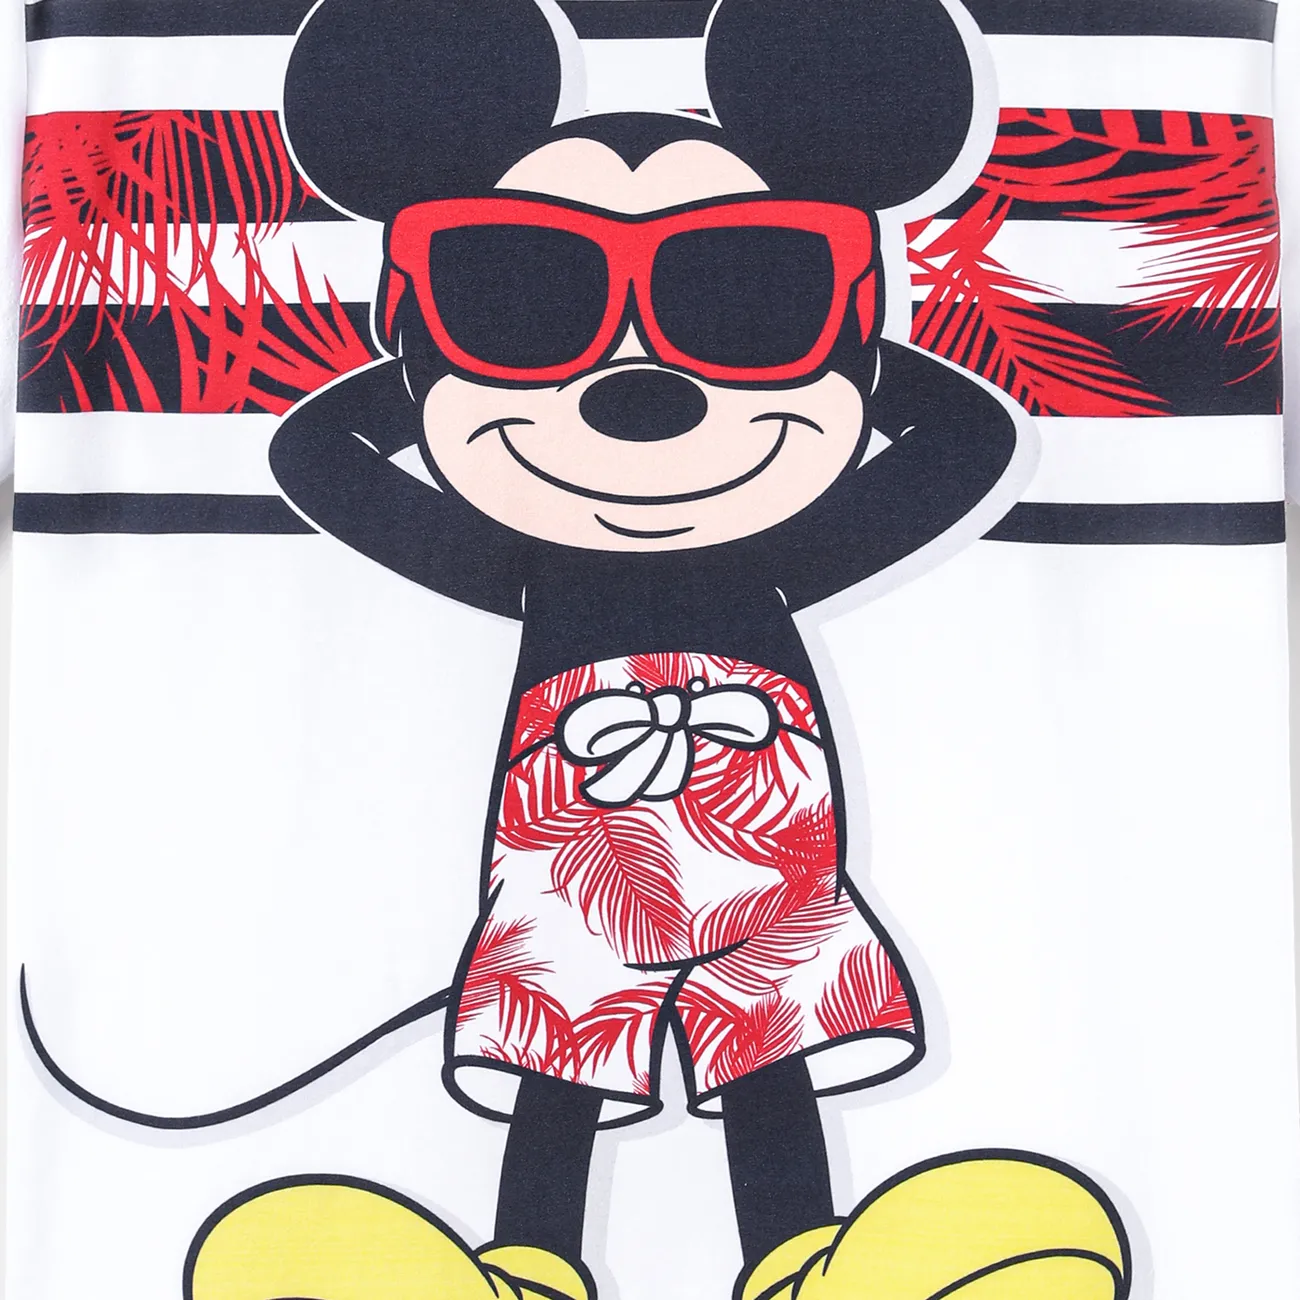 Disney Mickey and Friends 母親節 全家裝 短袖 親子裝 套裝 紅色 big image 1